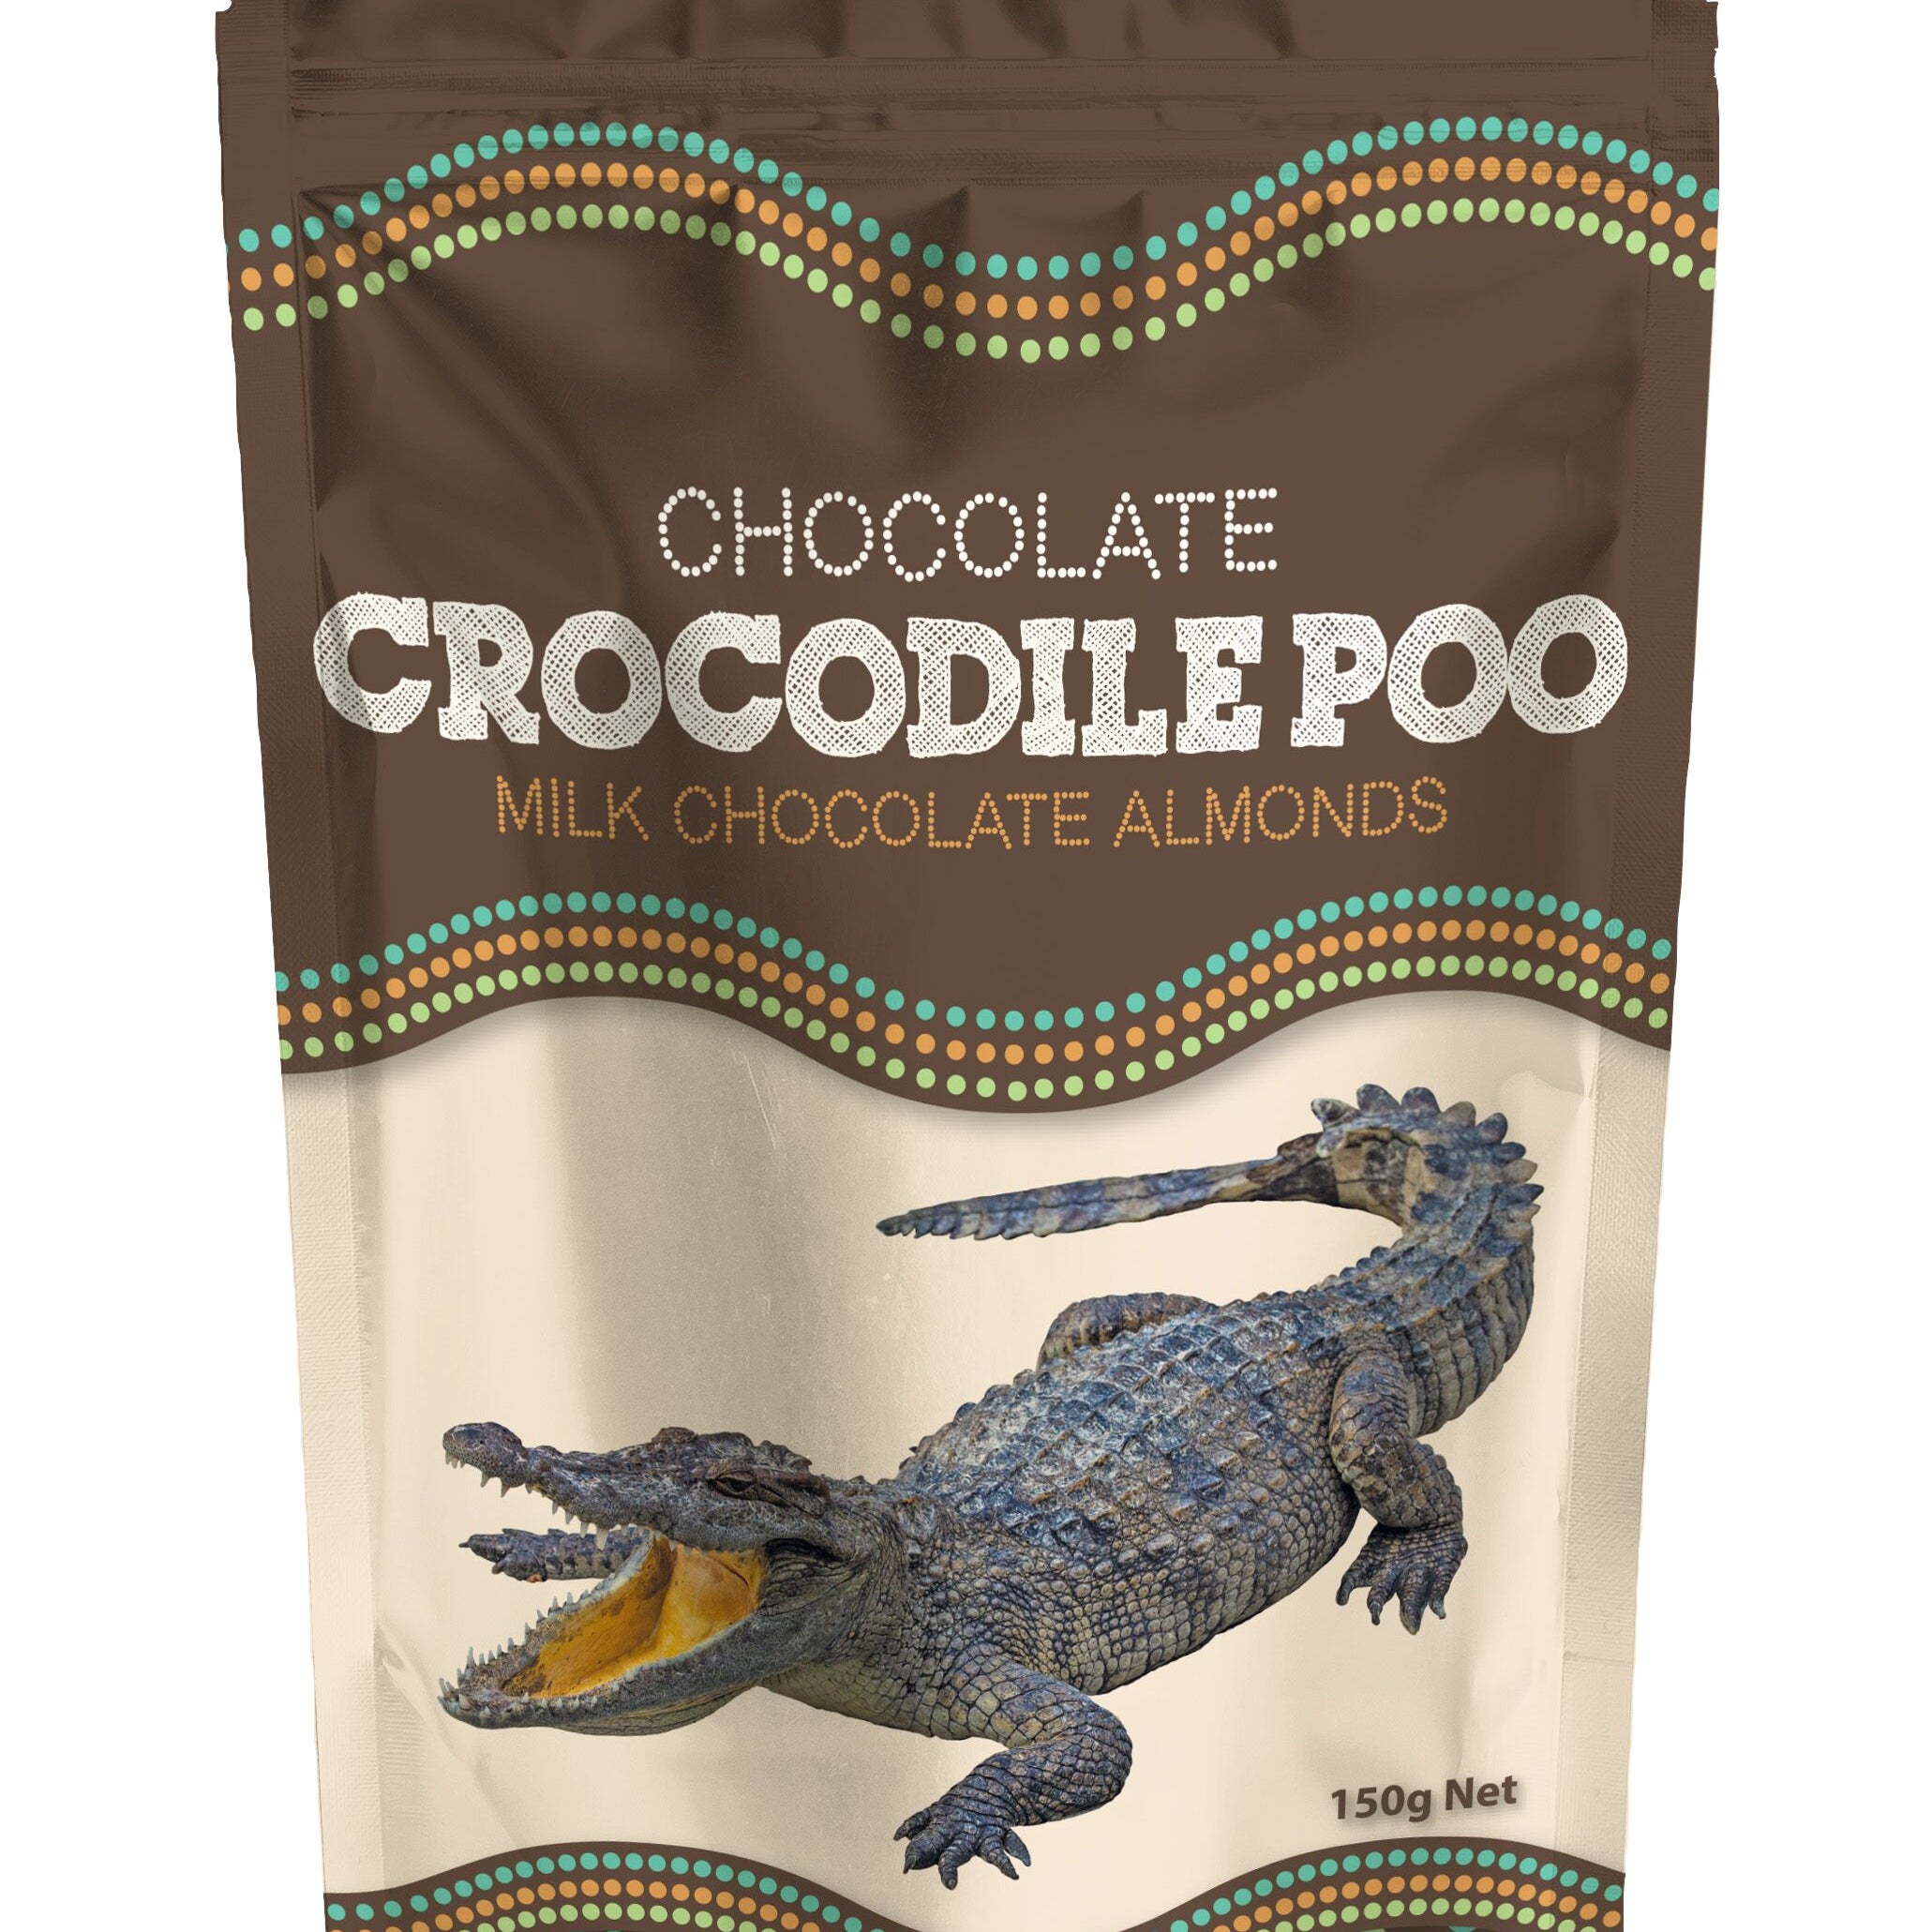 Chocolate crocodile poo souvenir gift